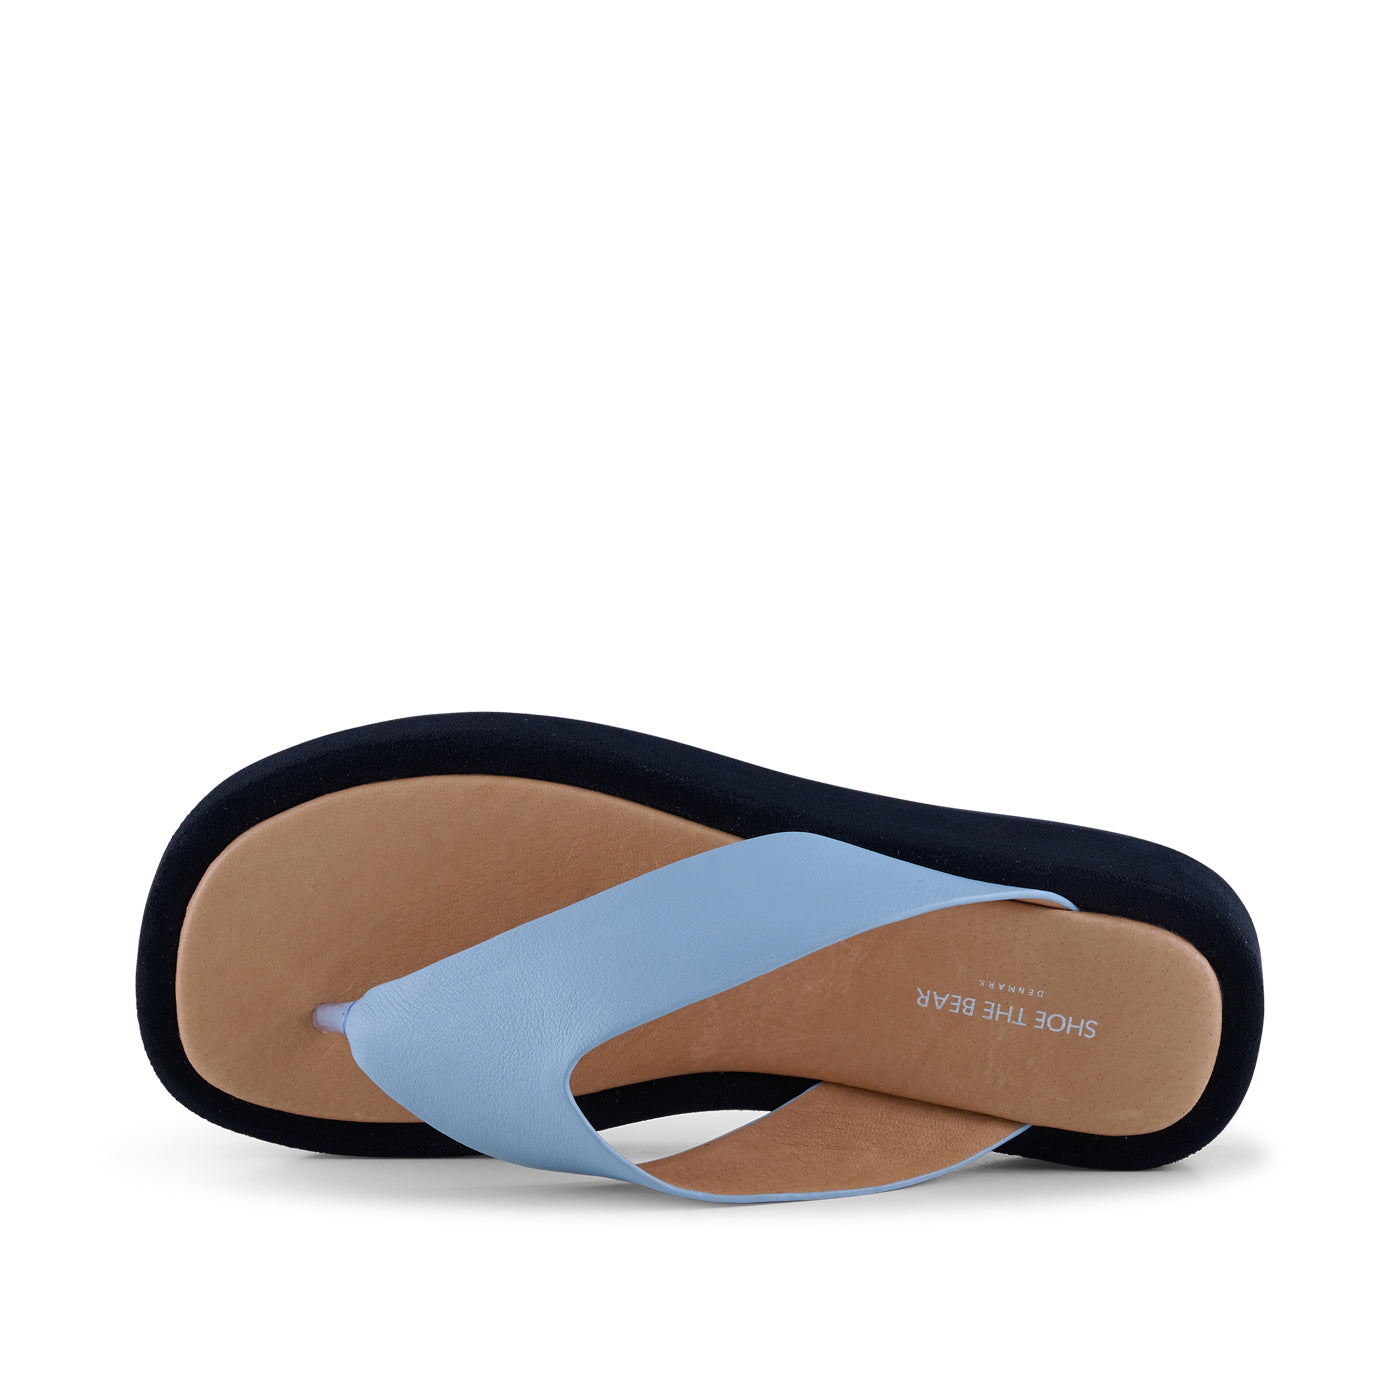 SHOE THE BEAR WOMENS Astrid sandal leather Sandals 170 BLUE